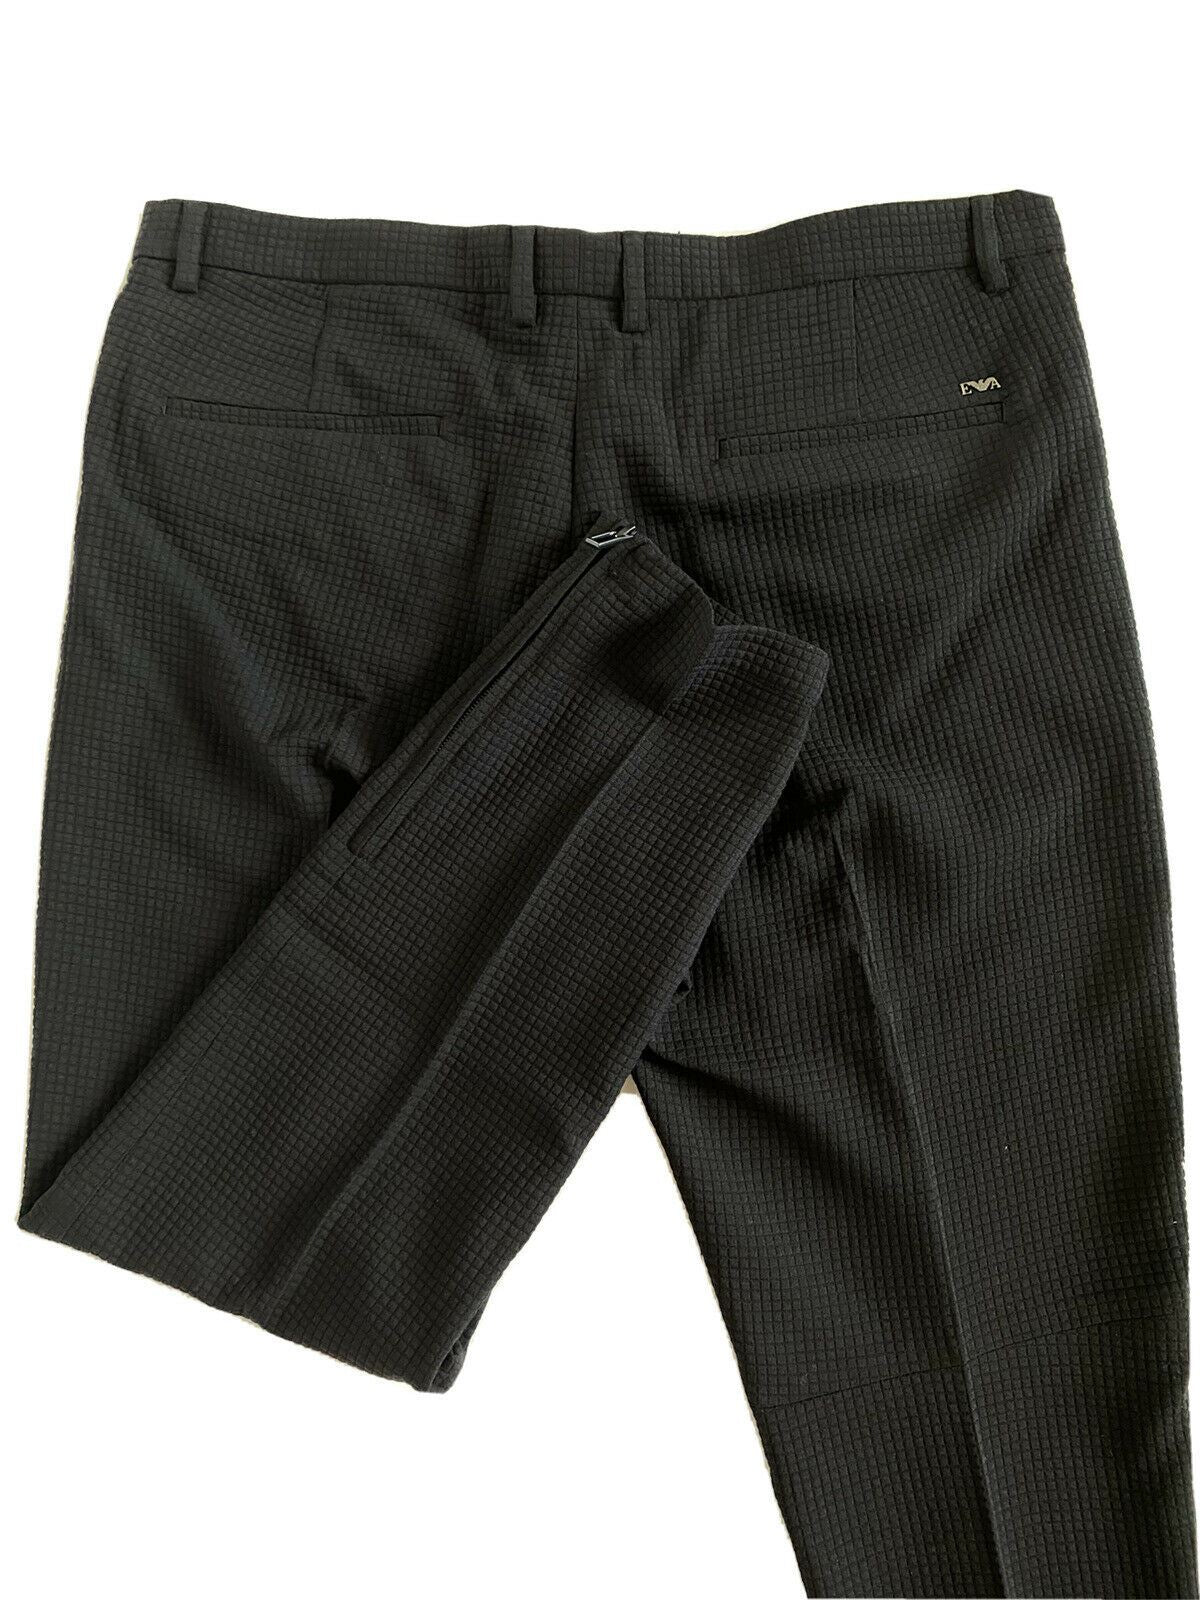 NWT $445 Emporio Armani Mens Black Casual Pants Size 36 US (52 Euro) 3G1PP6